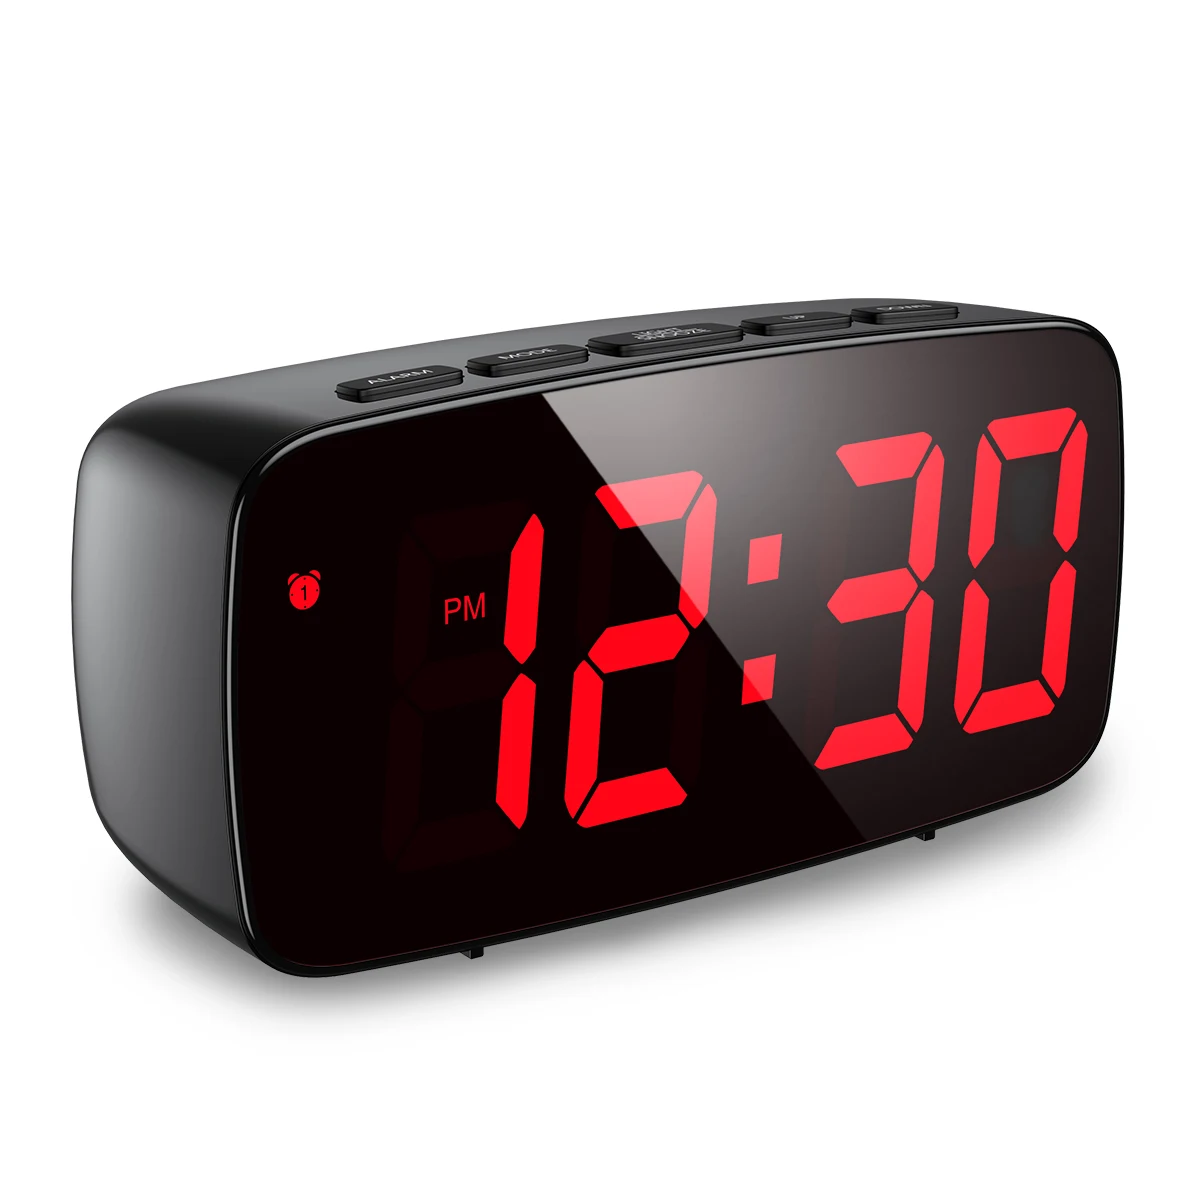 ORIA-Reloj Despertador Digital LED con Control de voz, Despertador de escritorio con...